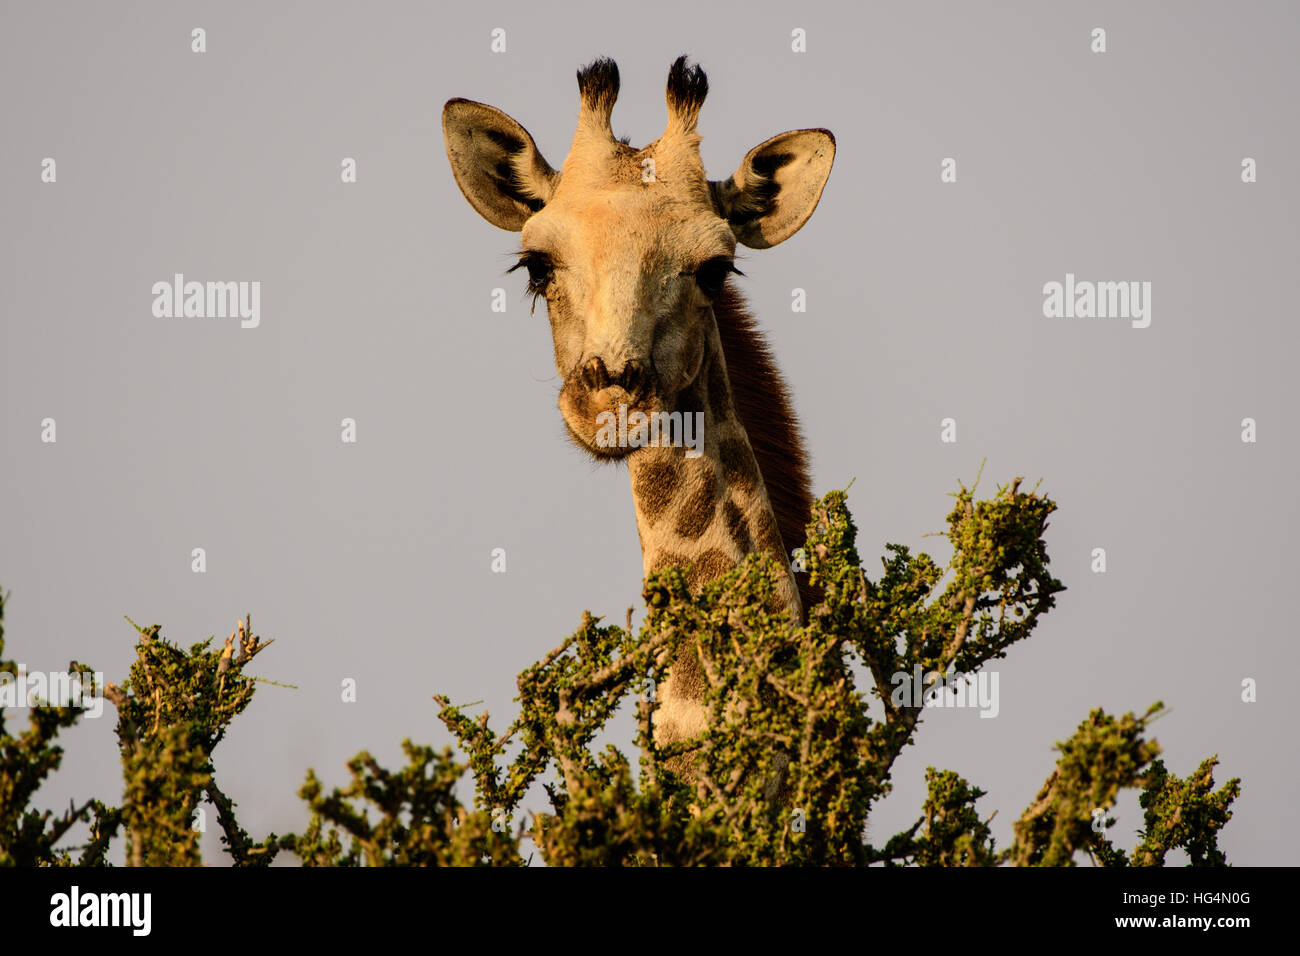 Giraffe at close quarters Stock Photo